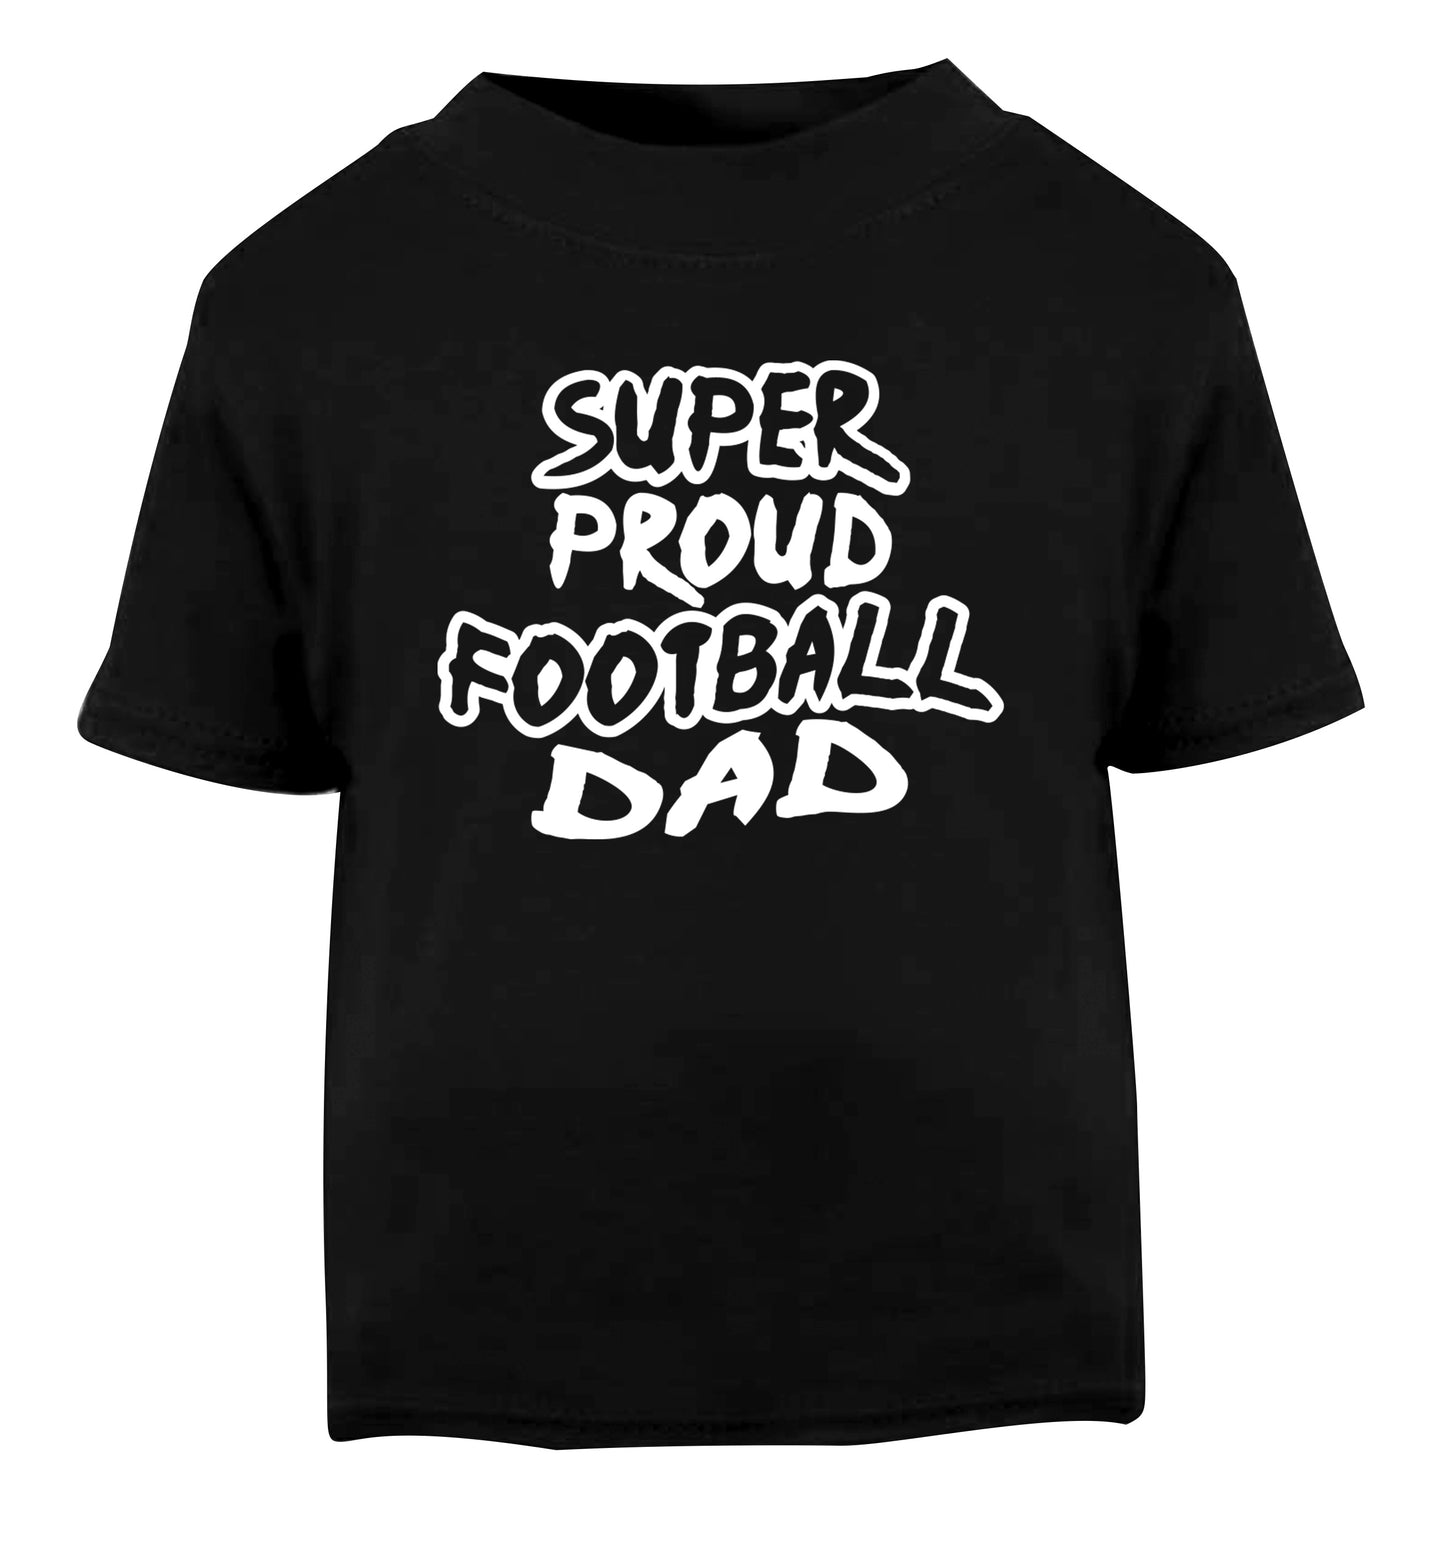 Super proud football dad Black Baby Toddler Tshirt 2 years